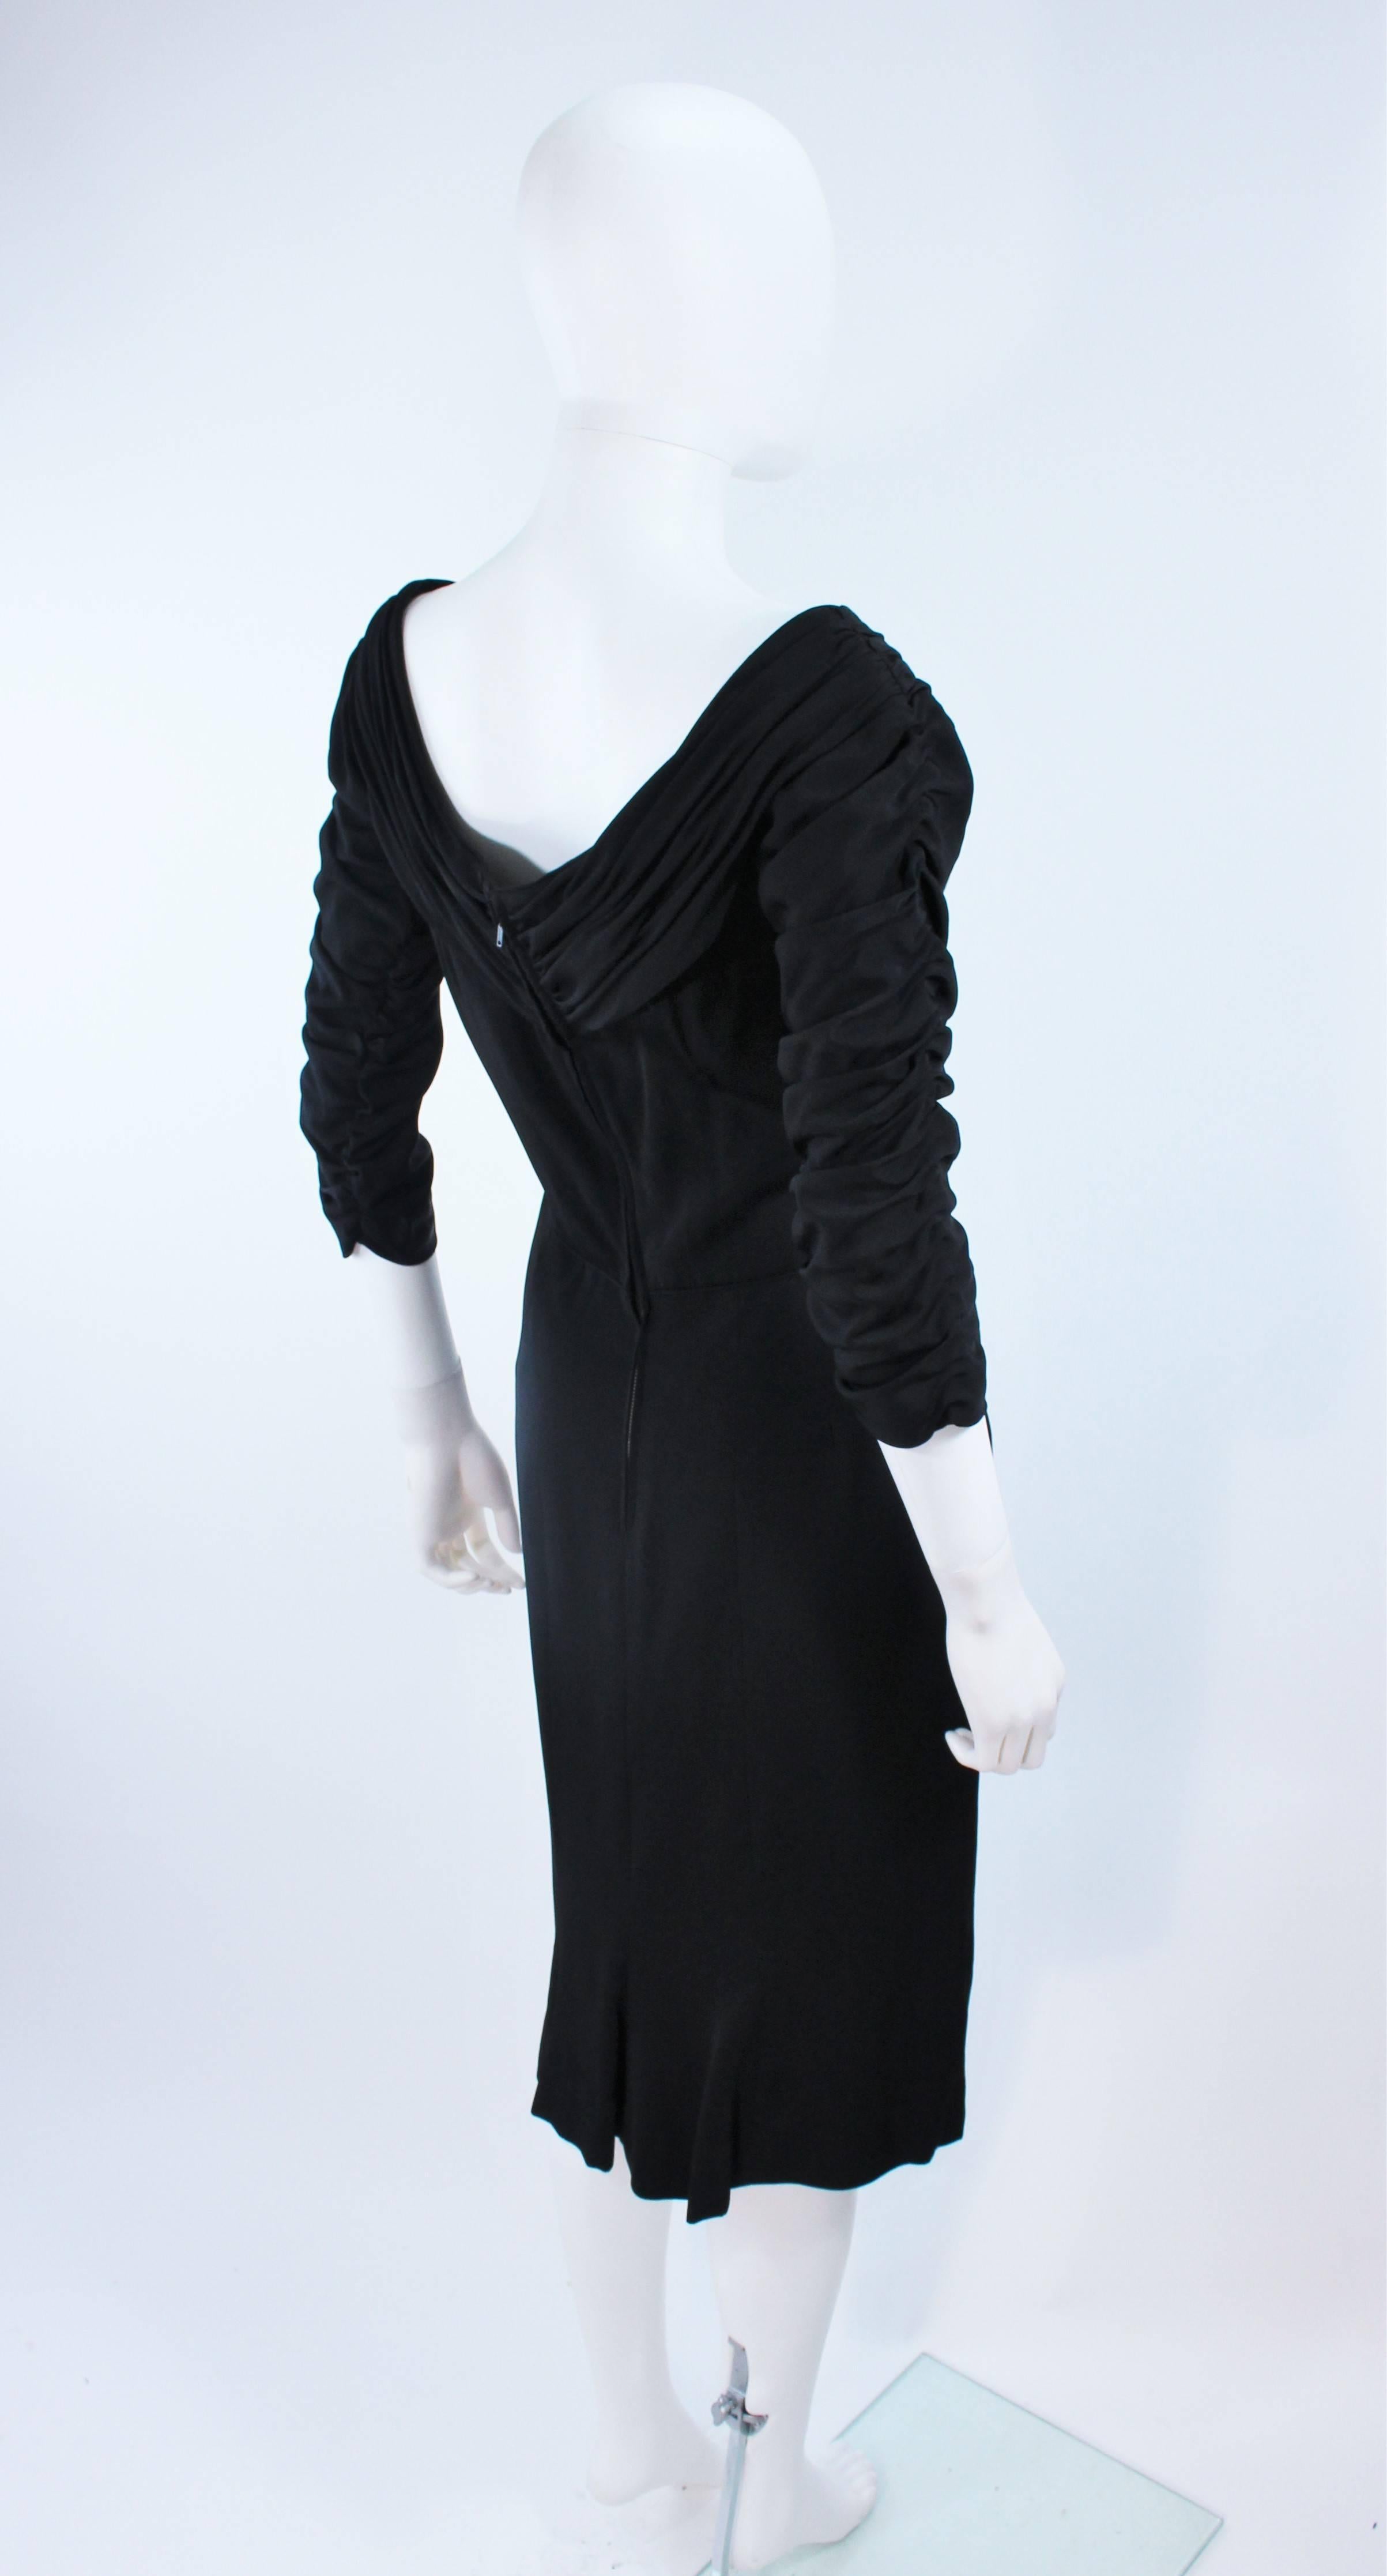 CEIL CHAPMAN Black Gathered Cocktail Dress Size 4 6  For Sale 2